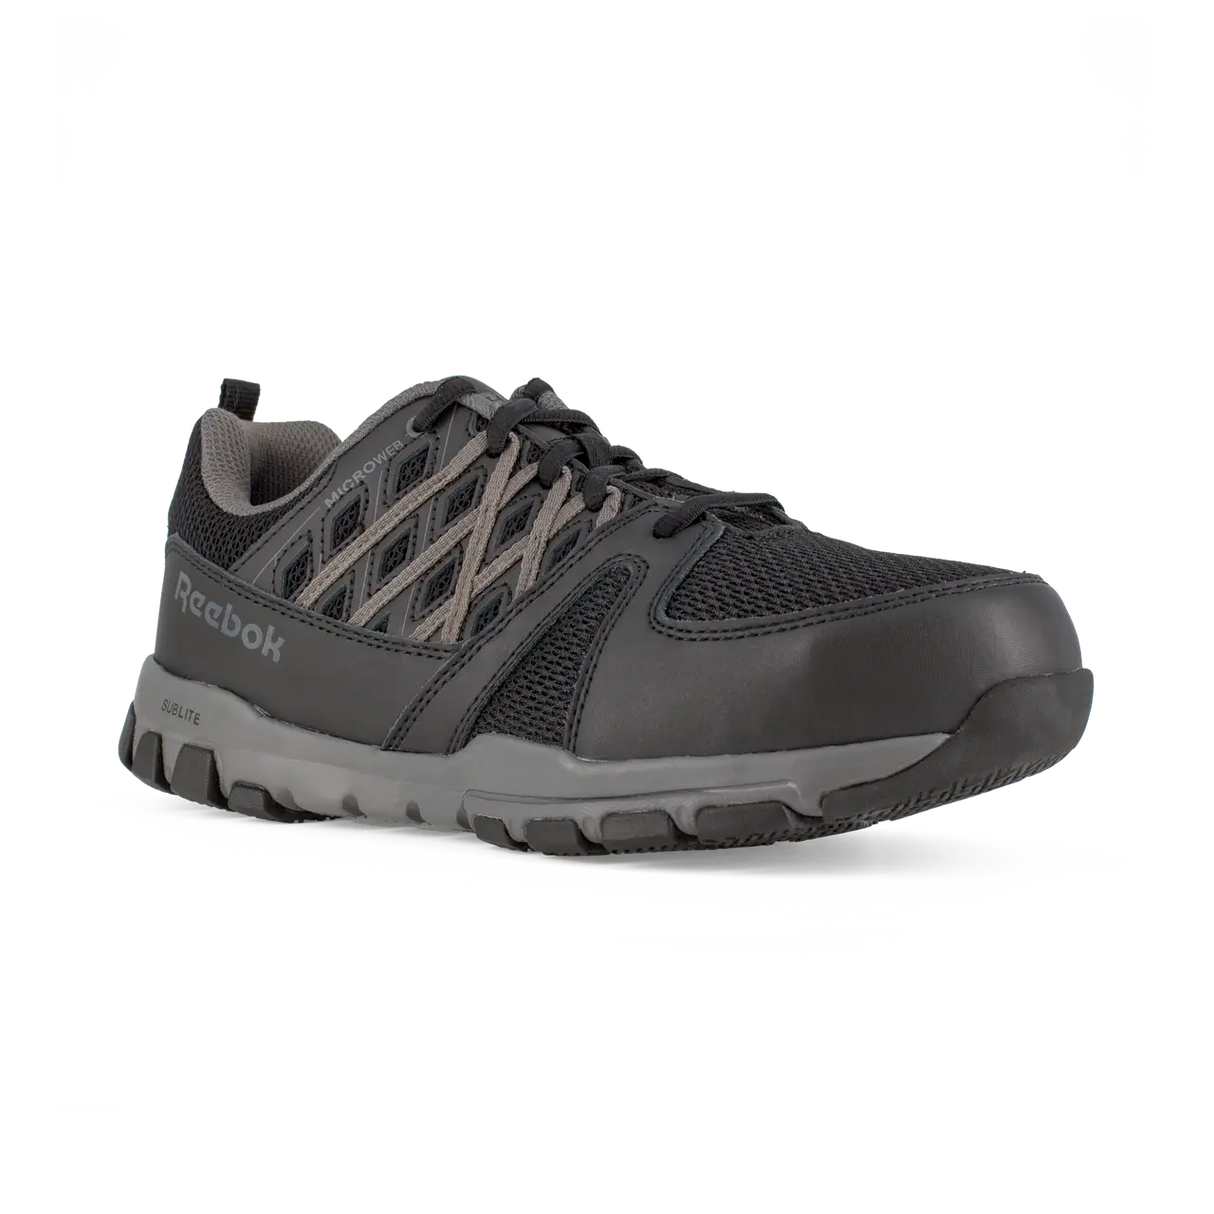 Reebok Women's Sublite Steel Toe Shoe Black with Grey RB416 details